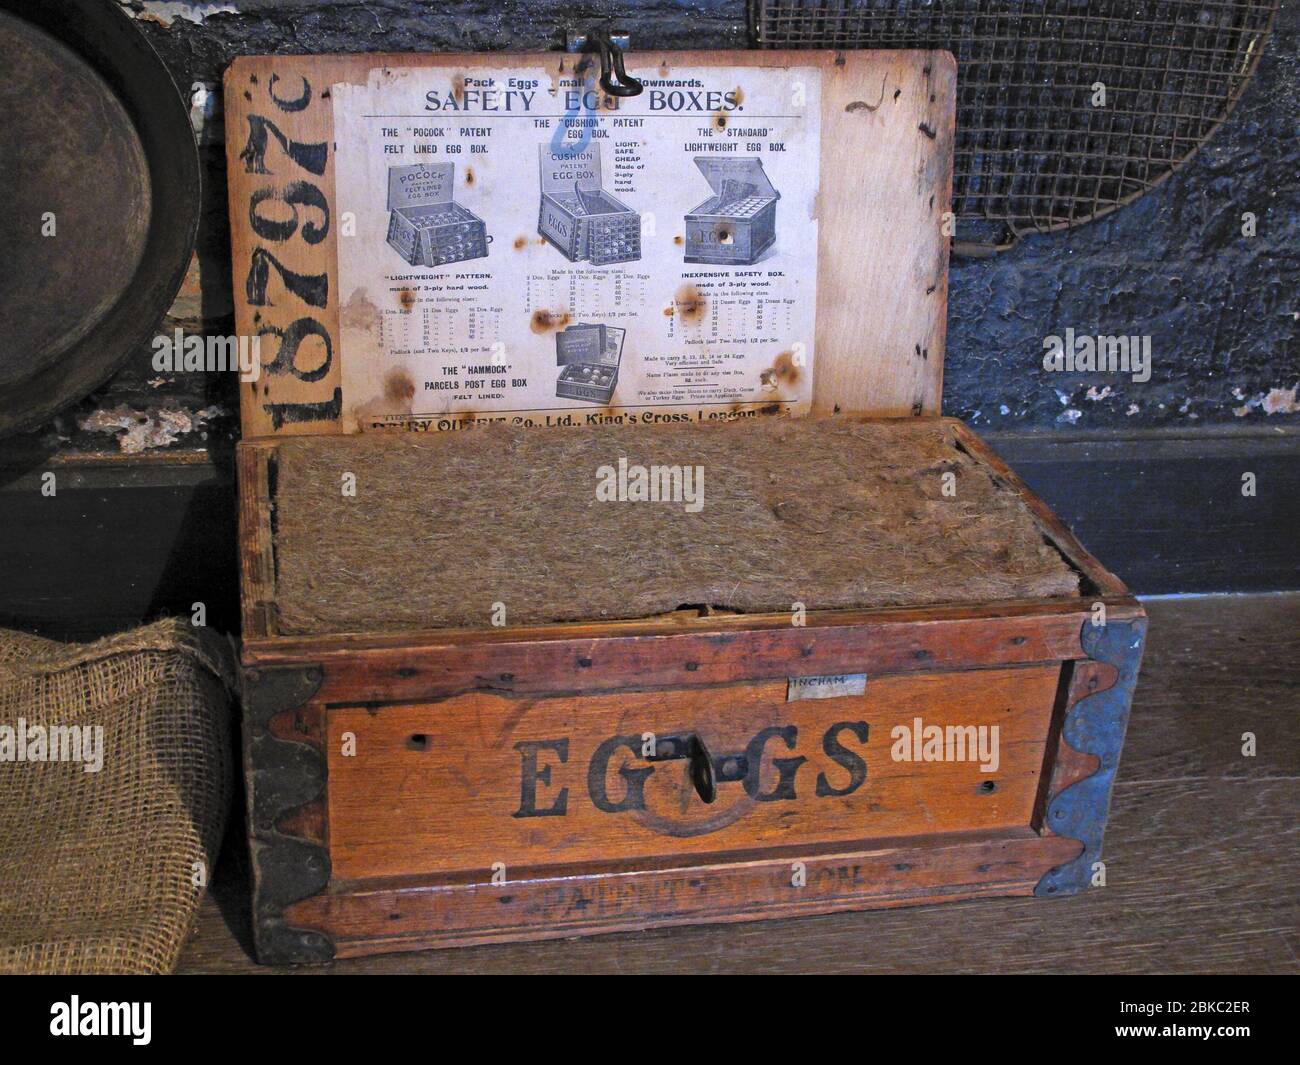 Pocock Safety Egg box, Pocock's Patent,wooden box, Cheshire, England, UK Stock Photo